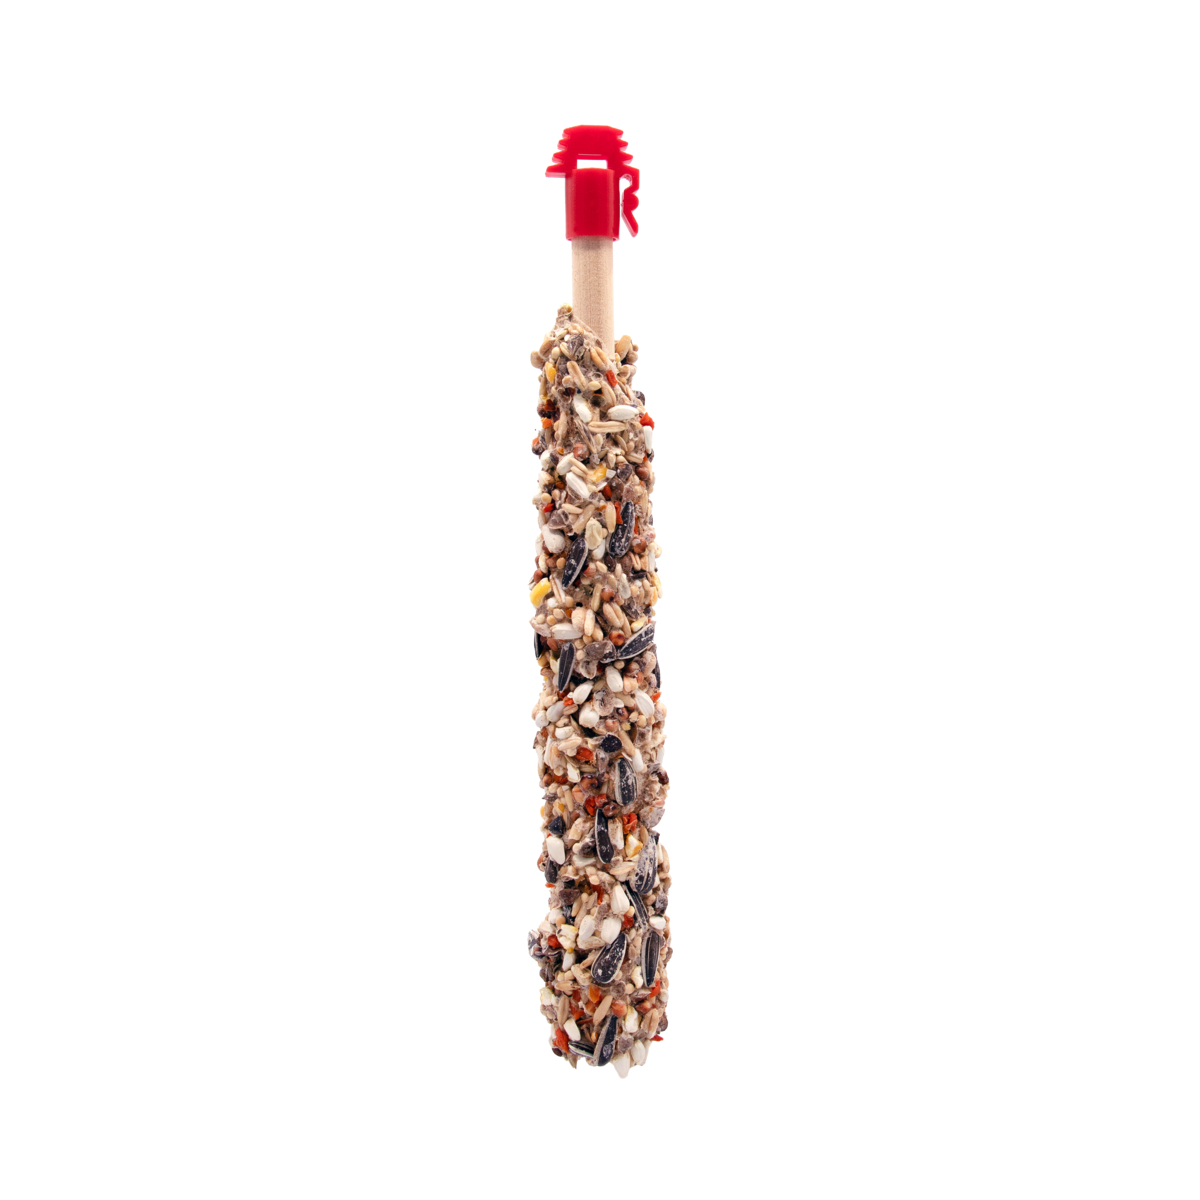 VERSELE LAGA Prestige Sticks Perroquets avec Légumes & Pissenlit